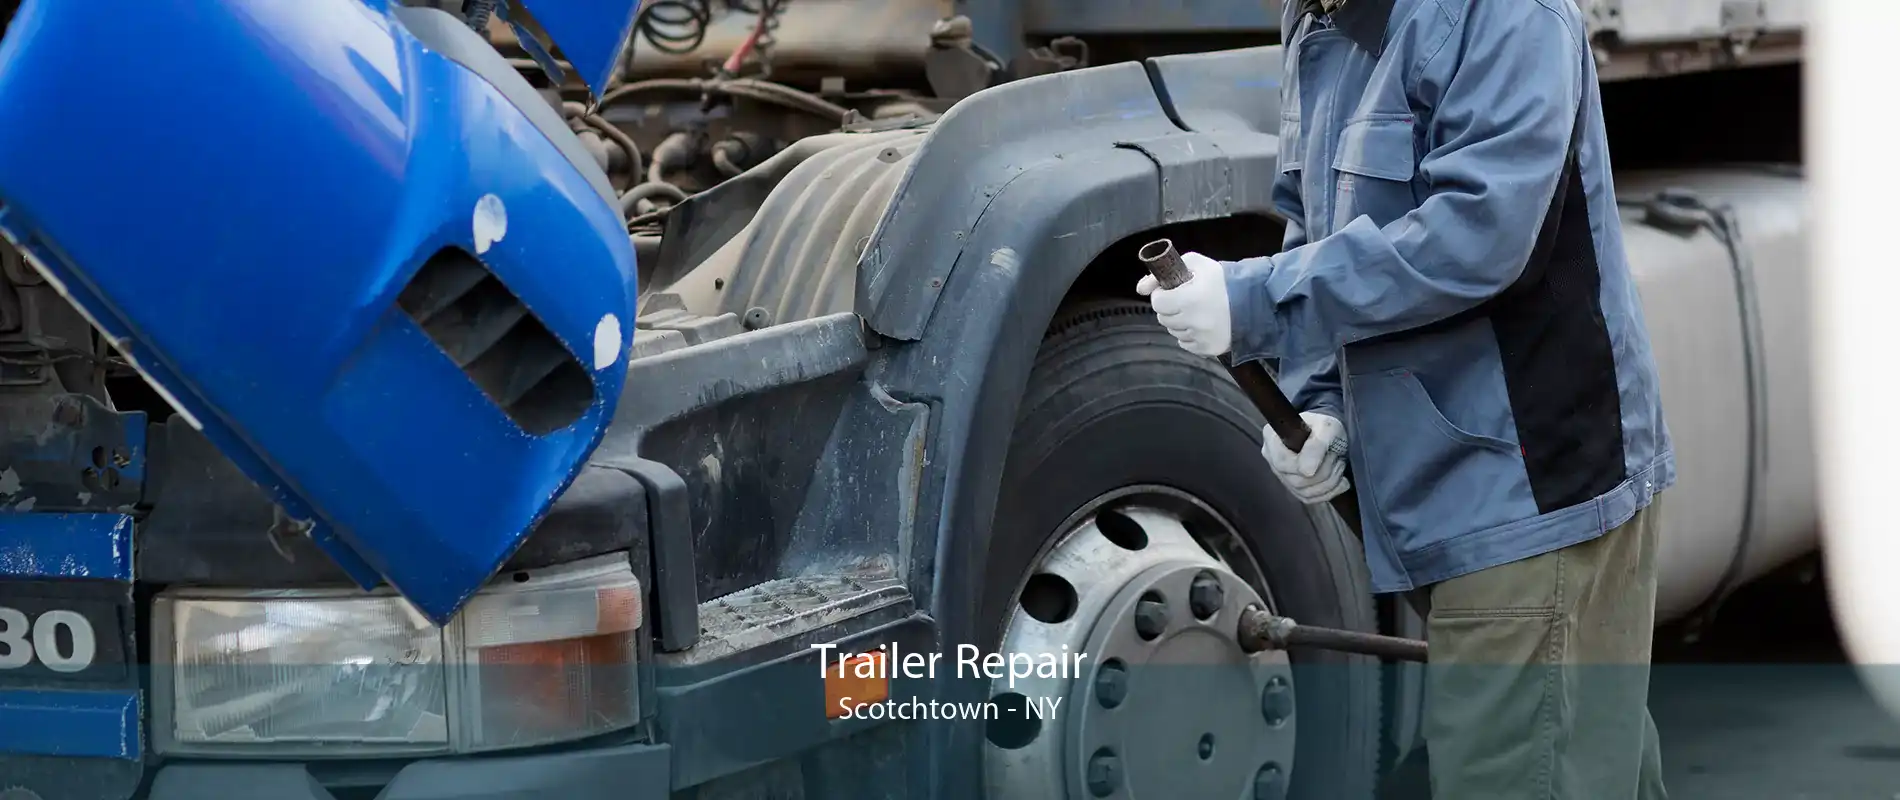 Trailer Repair Scotchtown - NY